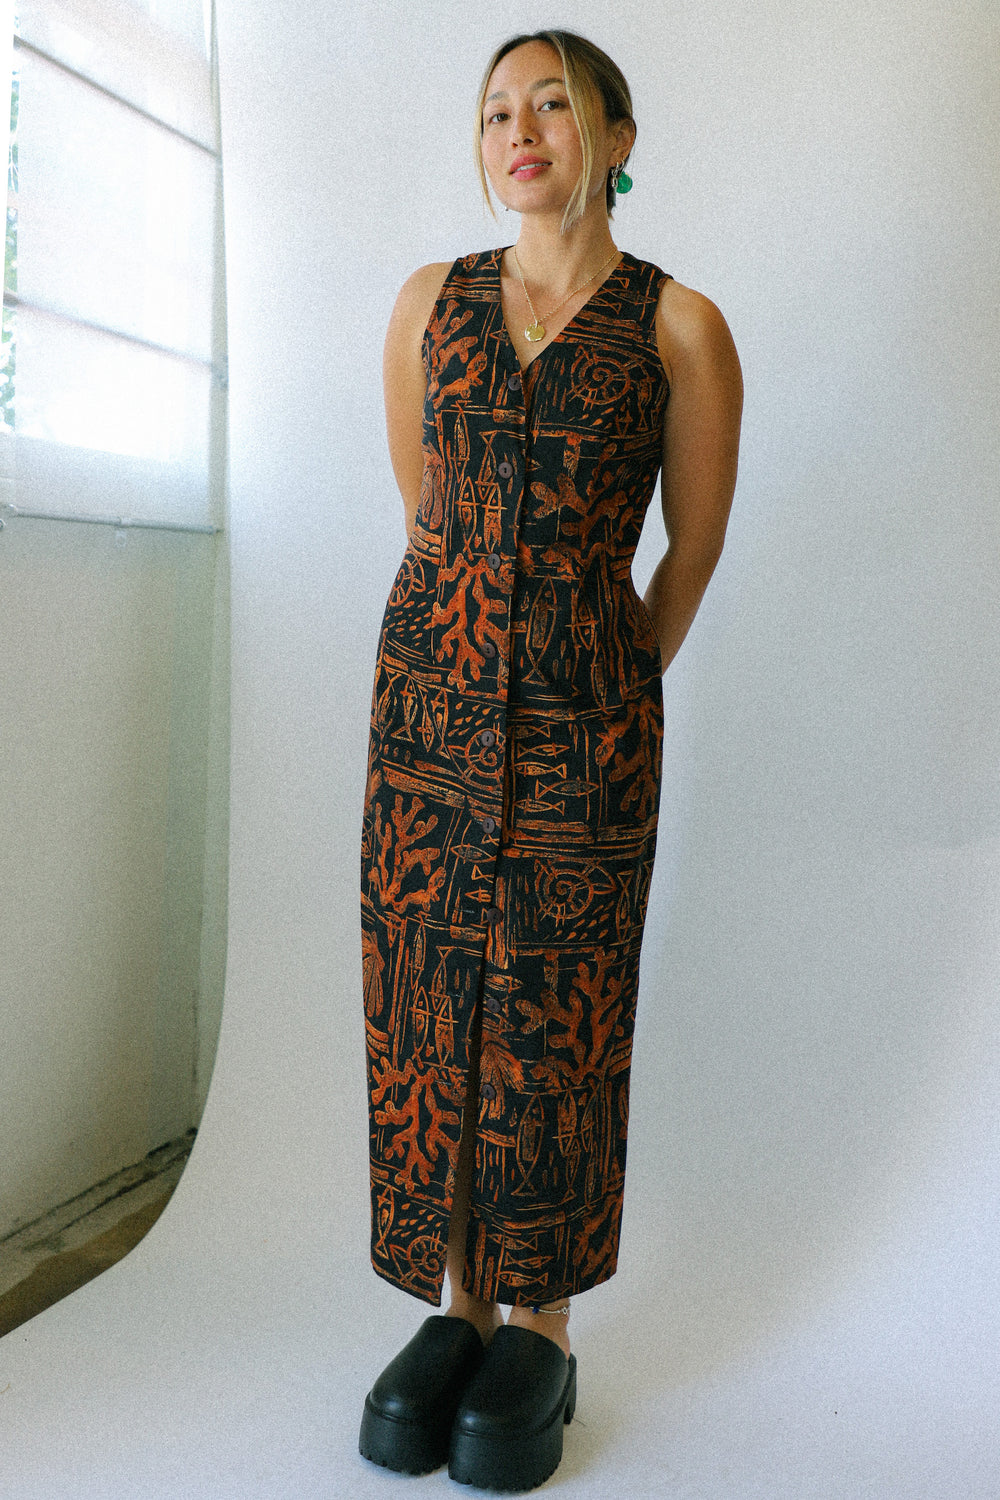 Hilo Hattie Hawaiian Dress